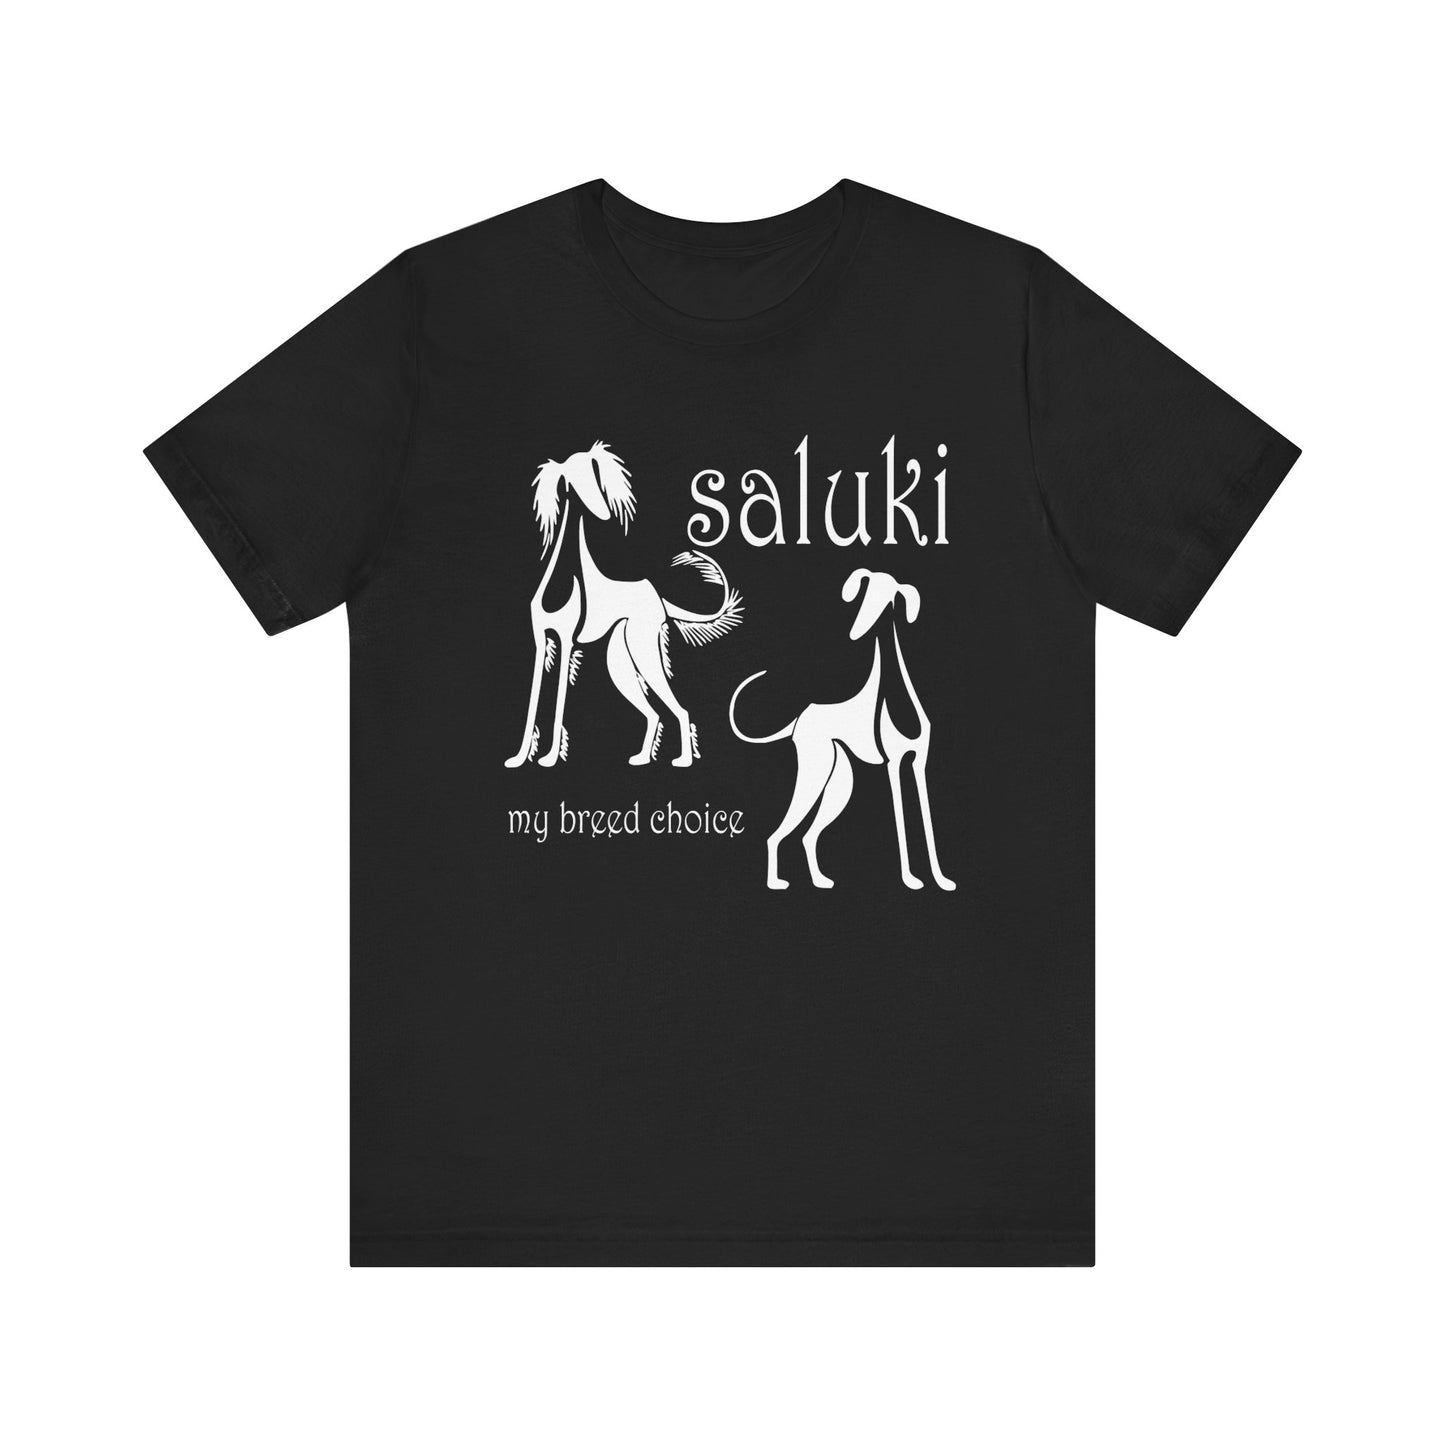 Unisex Jersey Short Sleeve Tee in black featuring the Saluki dog breed in 2 varieties.